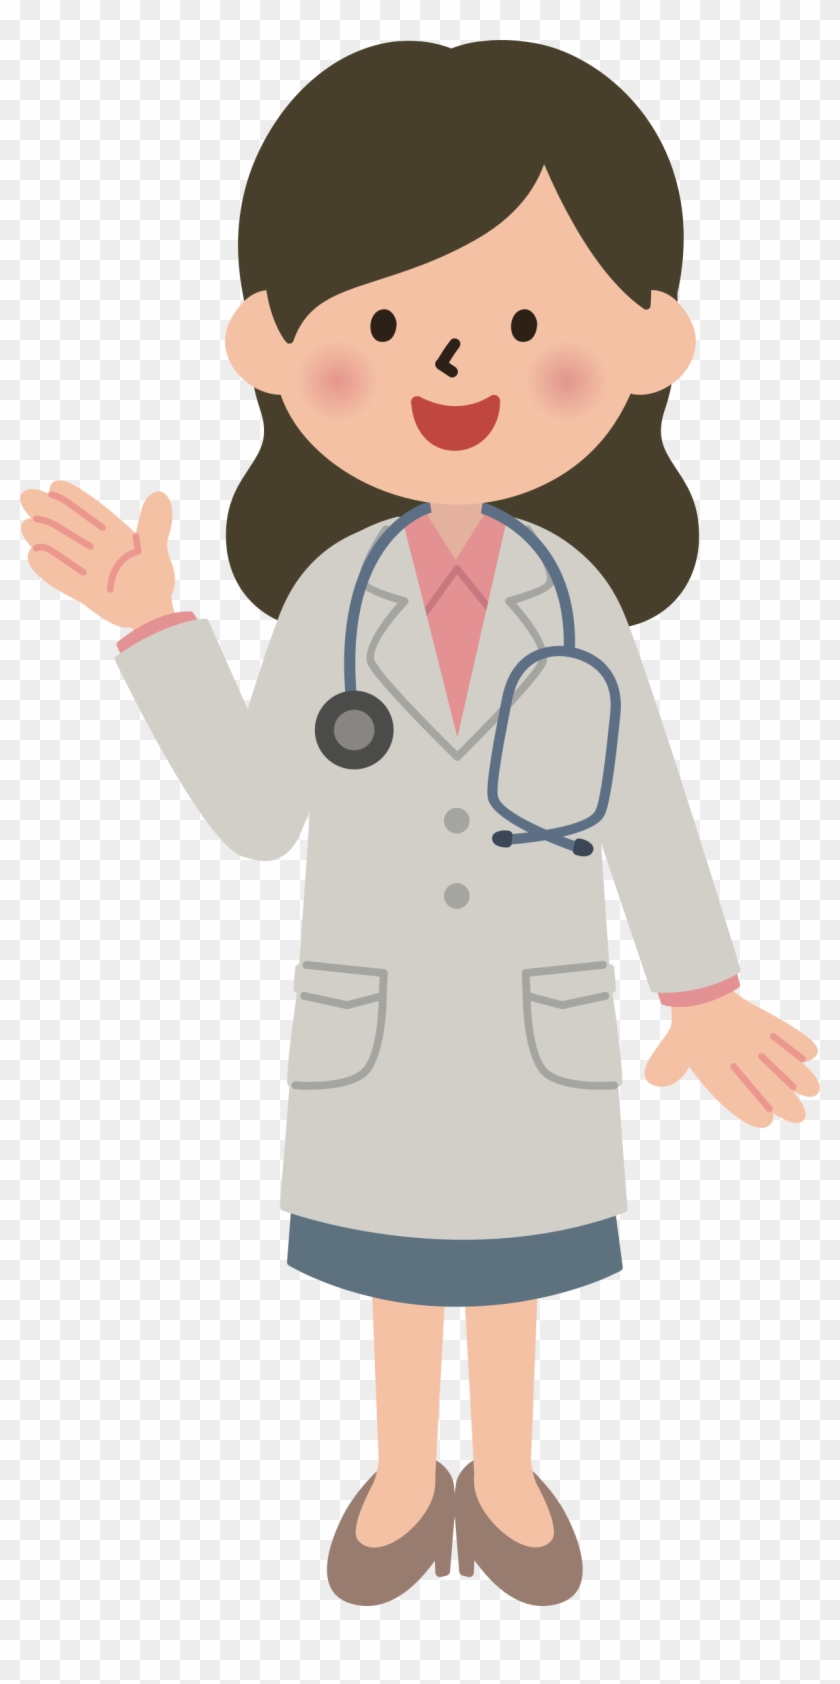 clipart female doctor